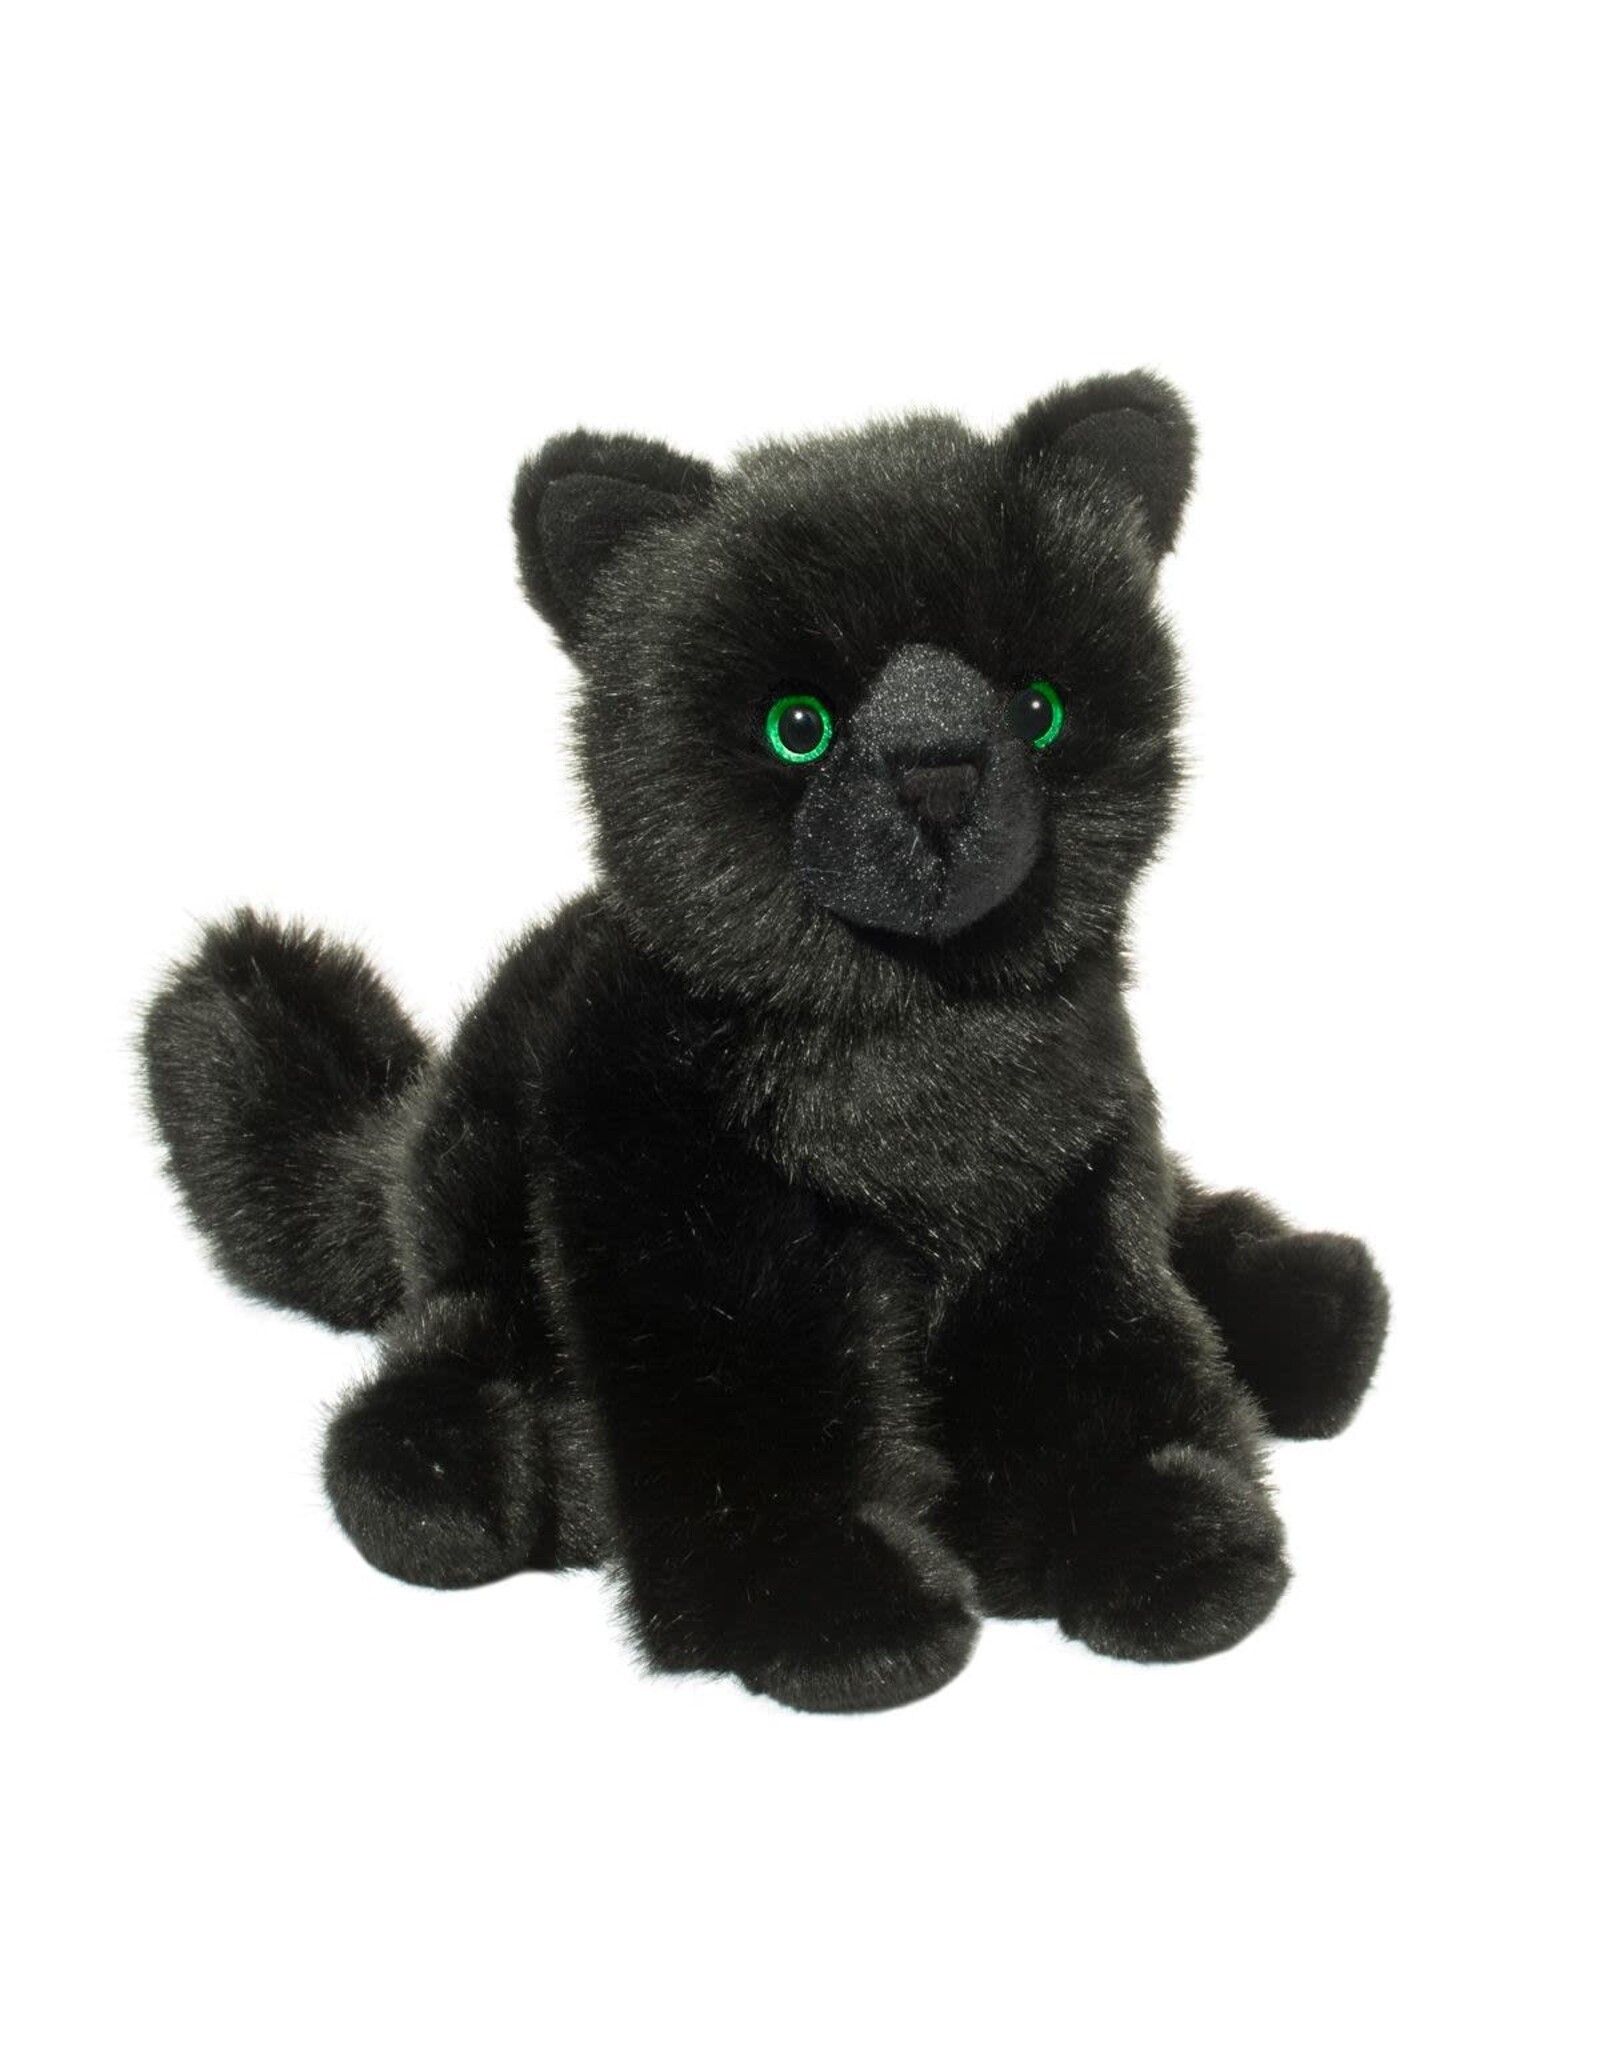 Douglas Douglas Cuddle Toys Salem Black Cat